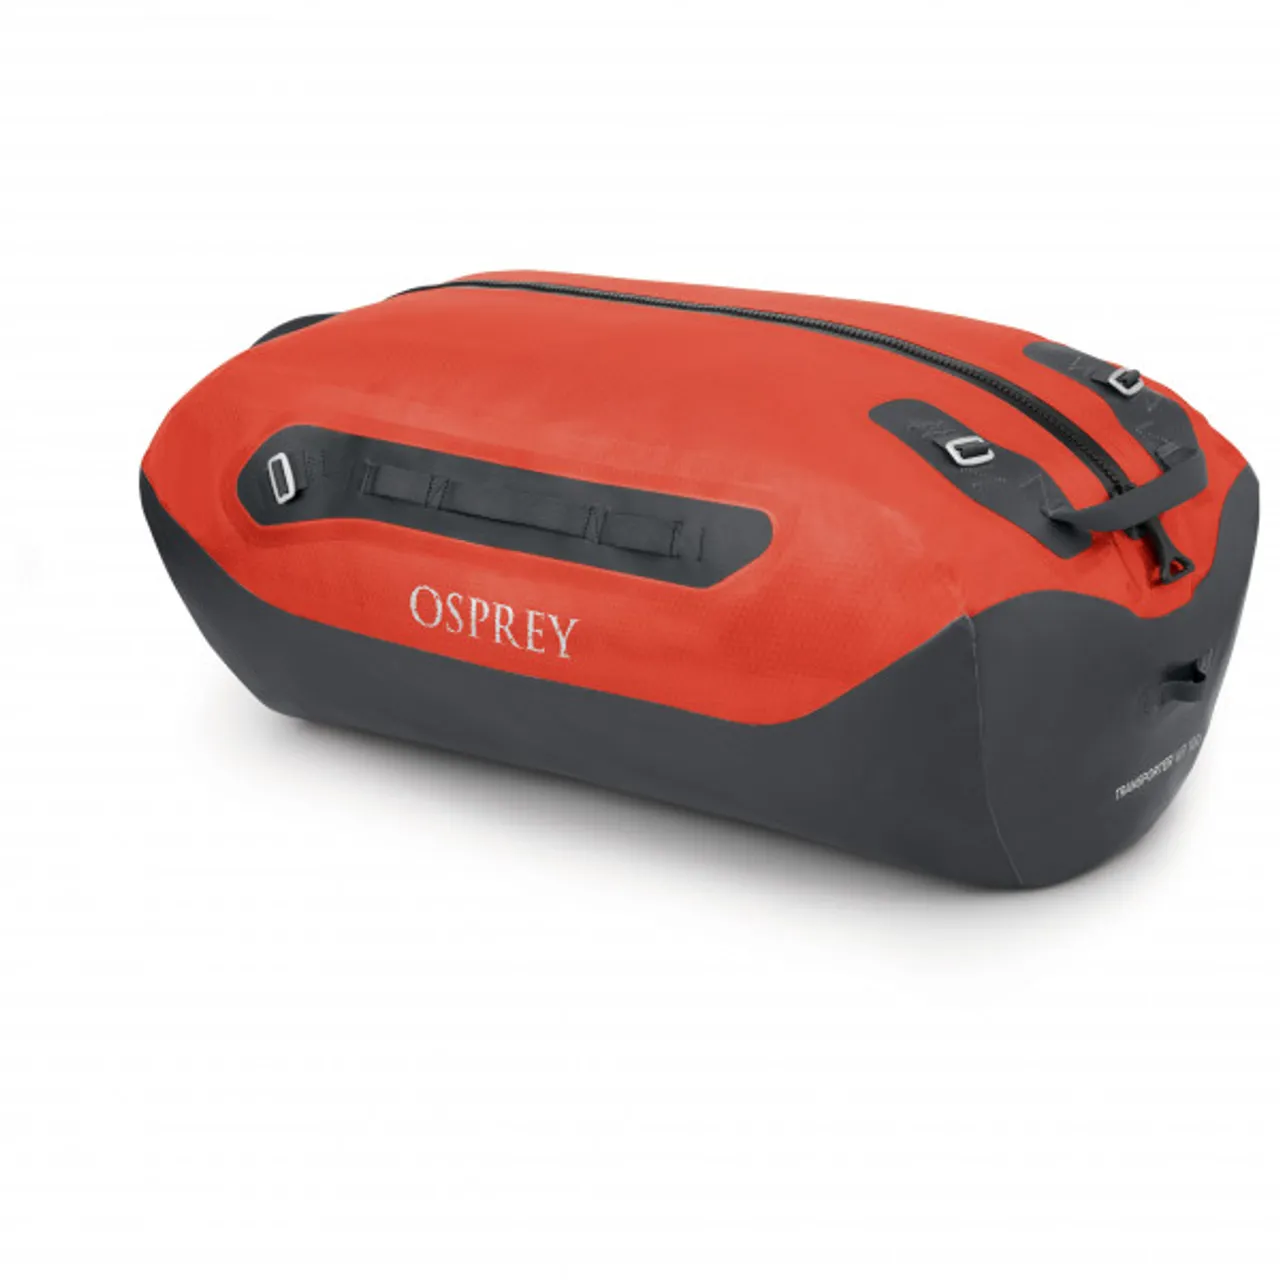 Osprey - Transporter WP Duffel 100 - Luggage size 100 l, red